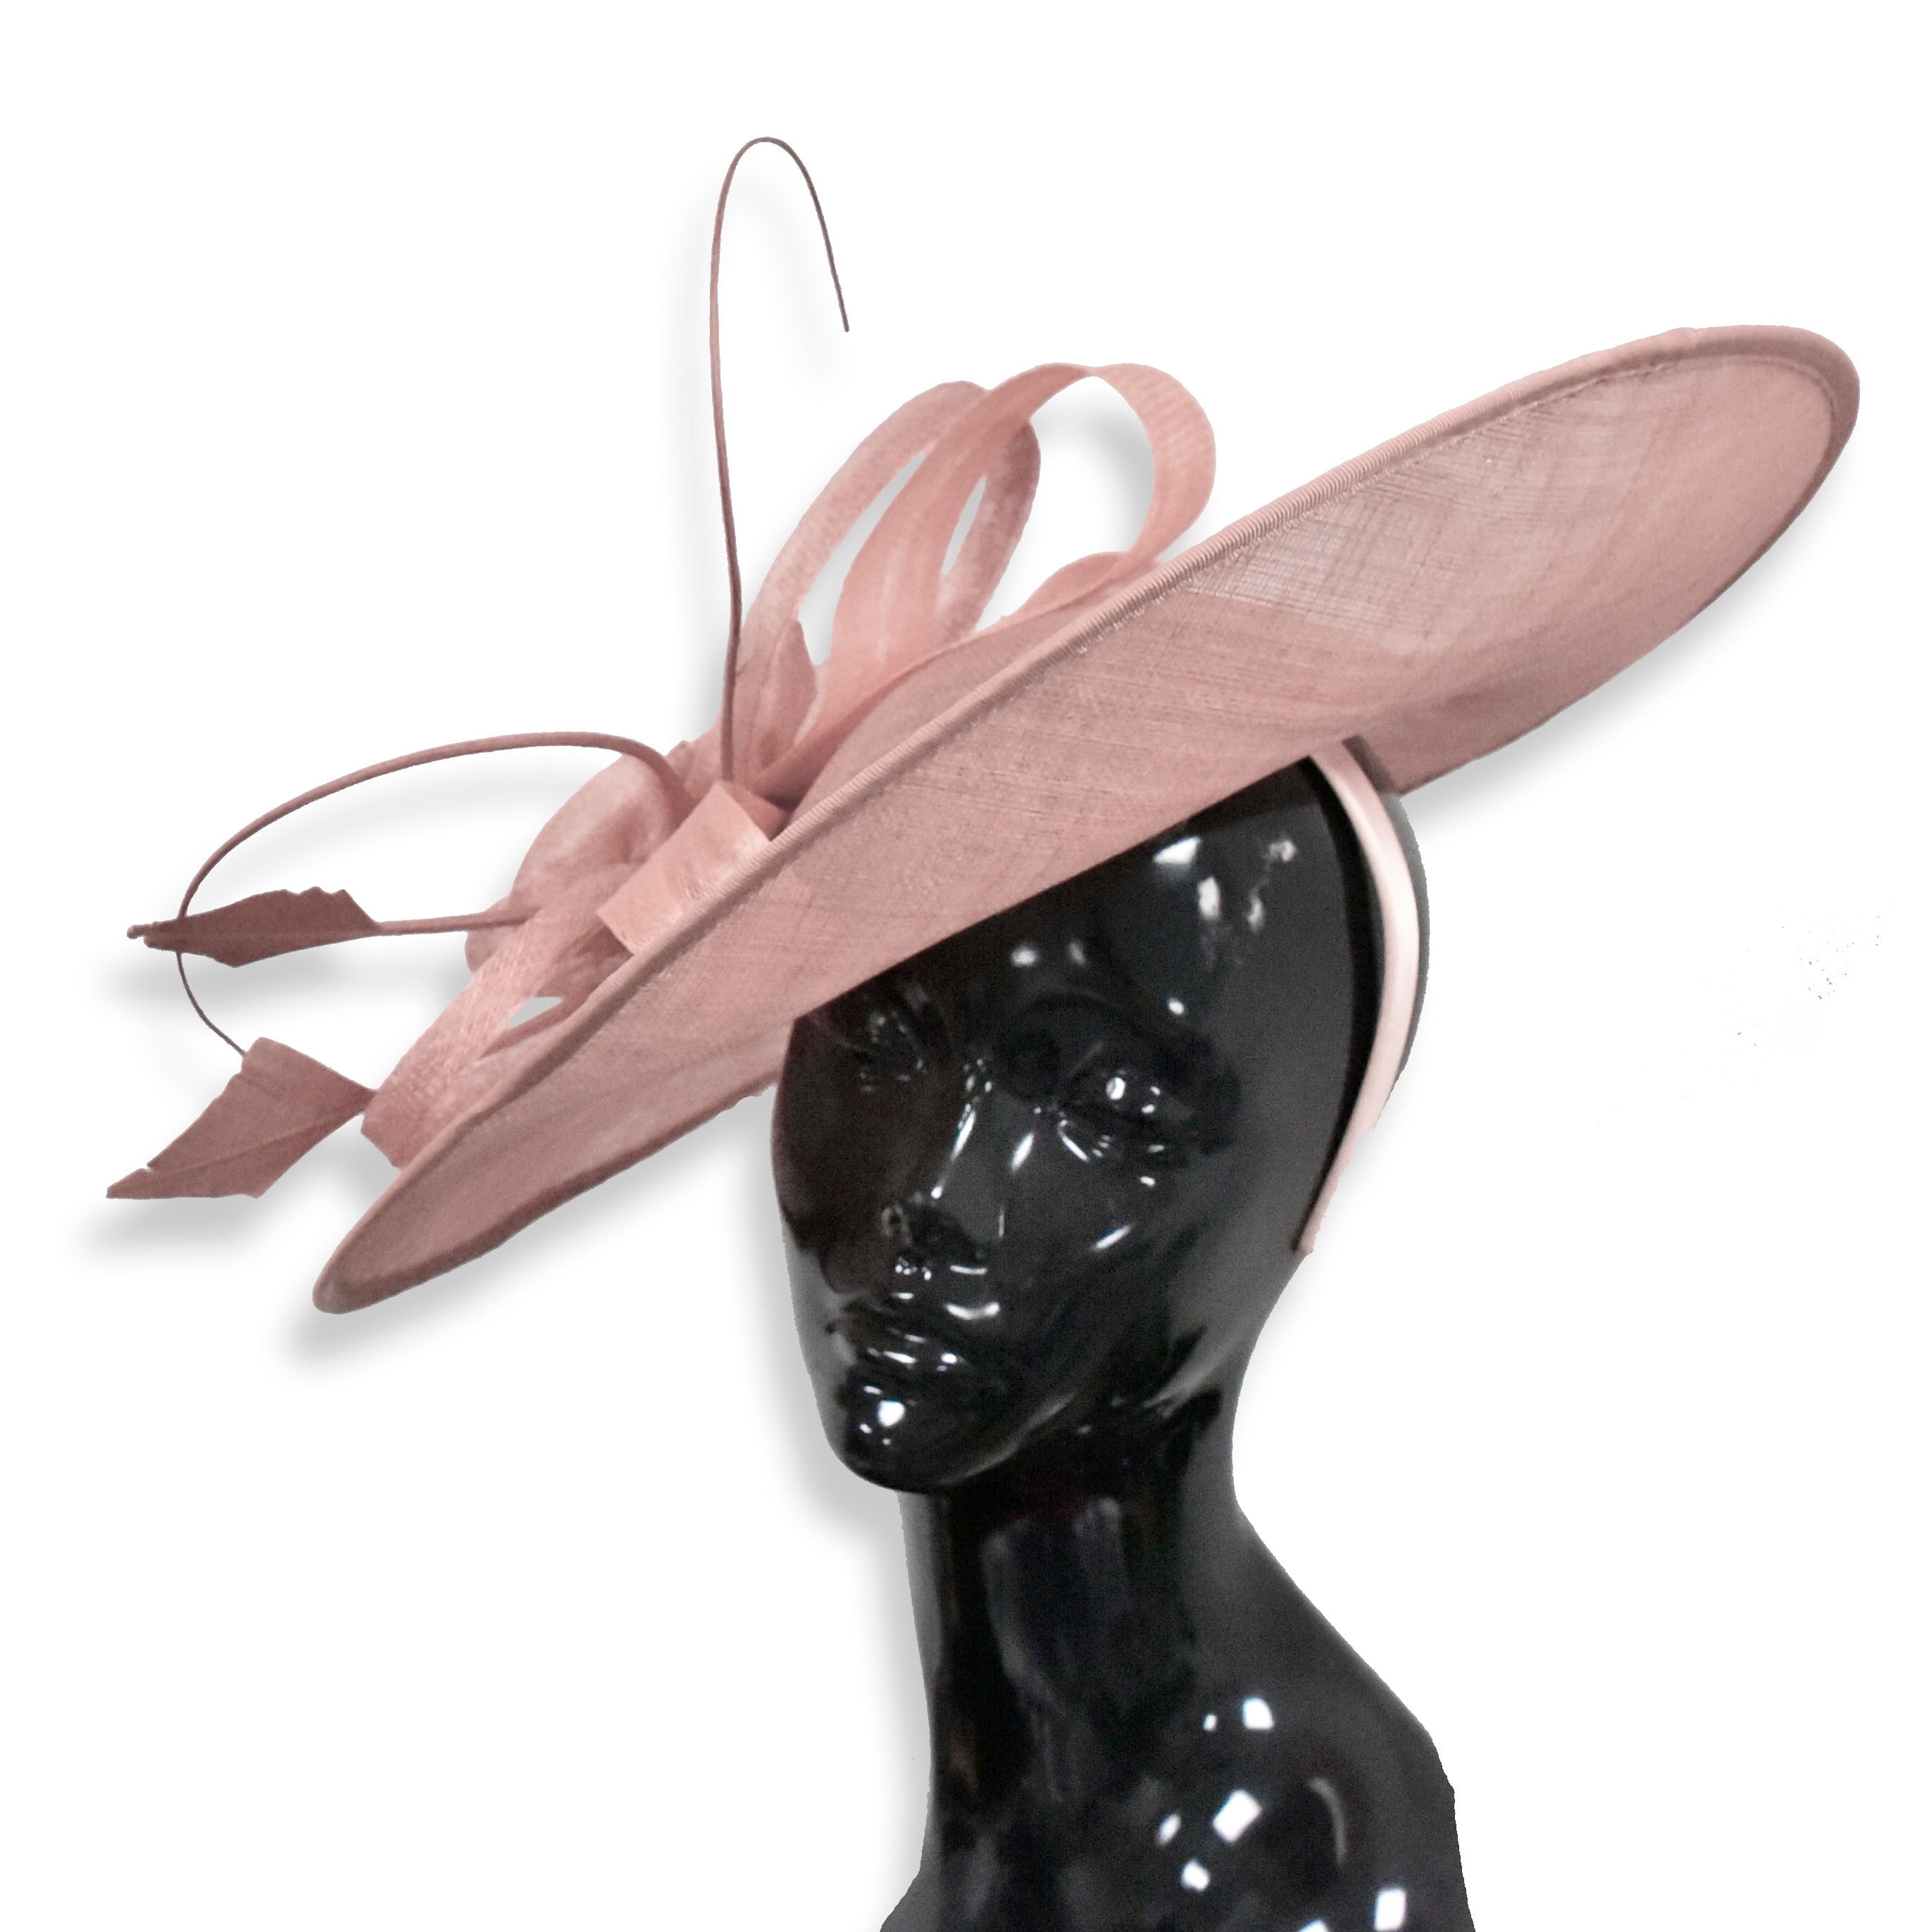 Dusty Pink Blush 41cm Large Sinamay Hatinator Disc Saucer Brim Hat Fascinator on Headband